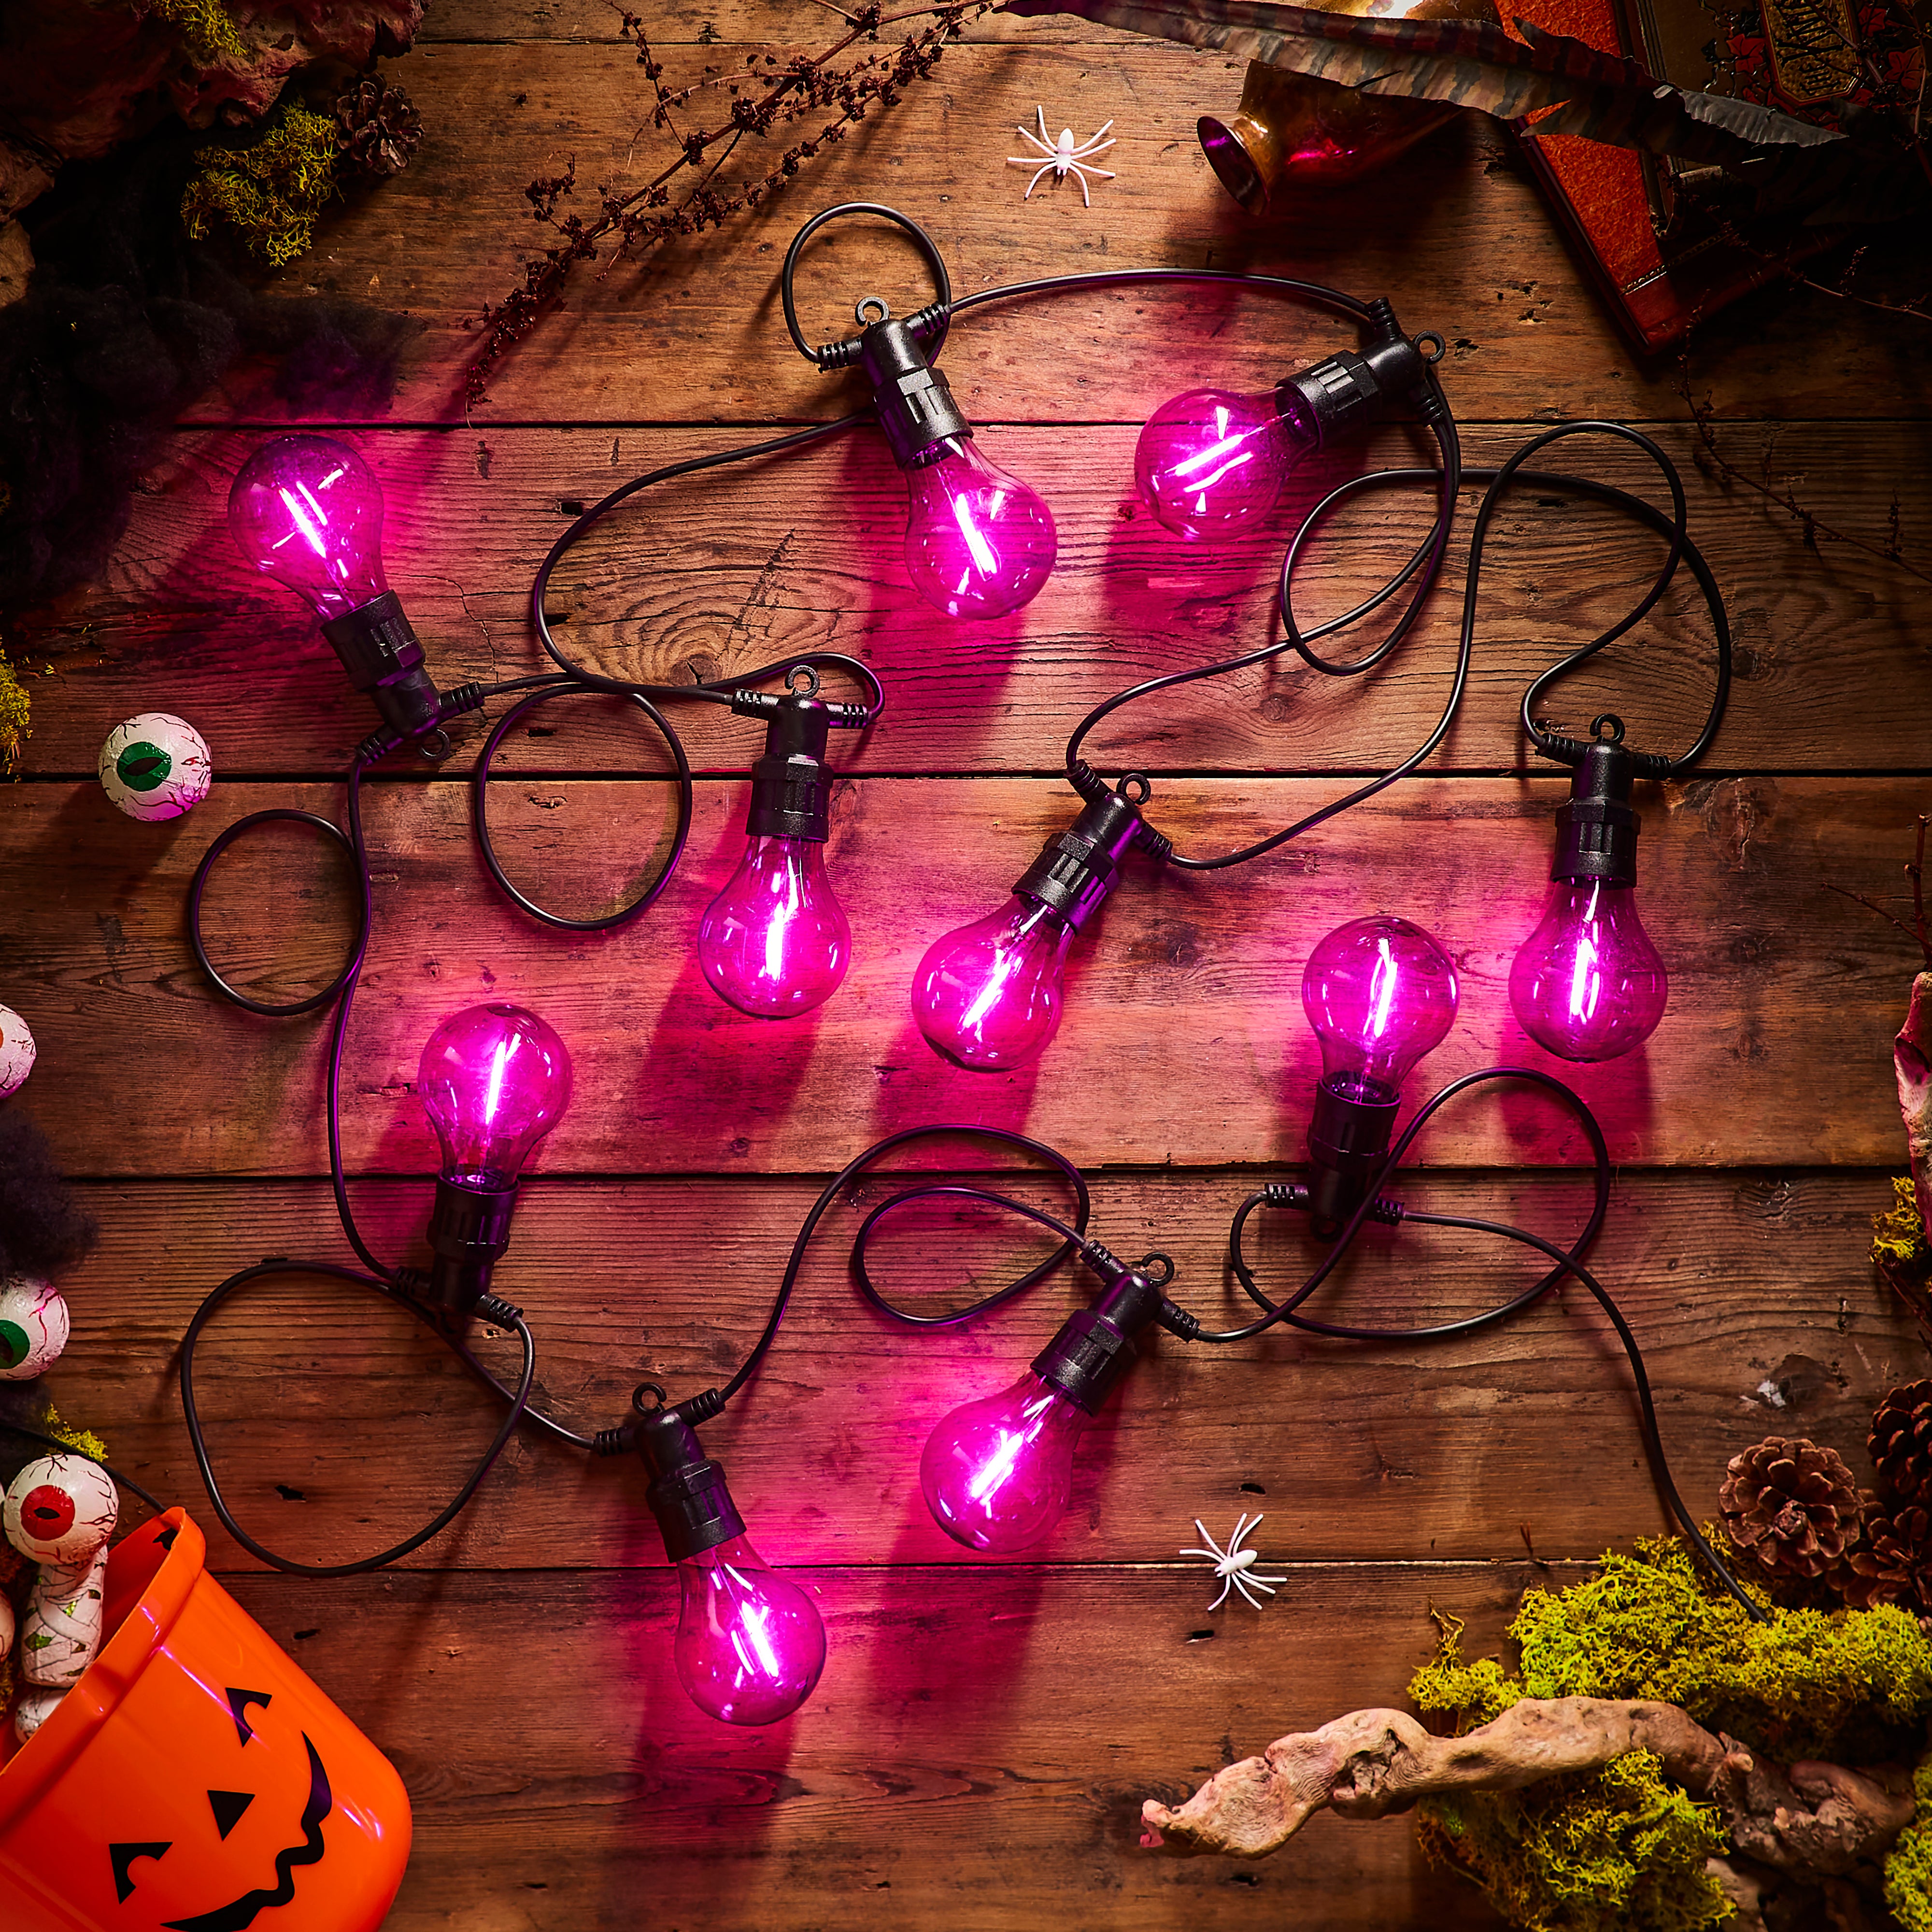 Festoon 10 Indoor Outdoor LED String Lights